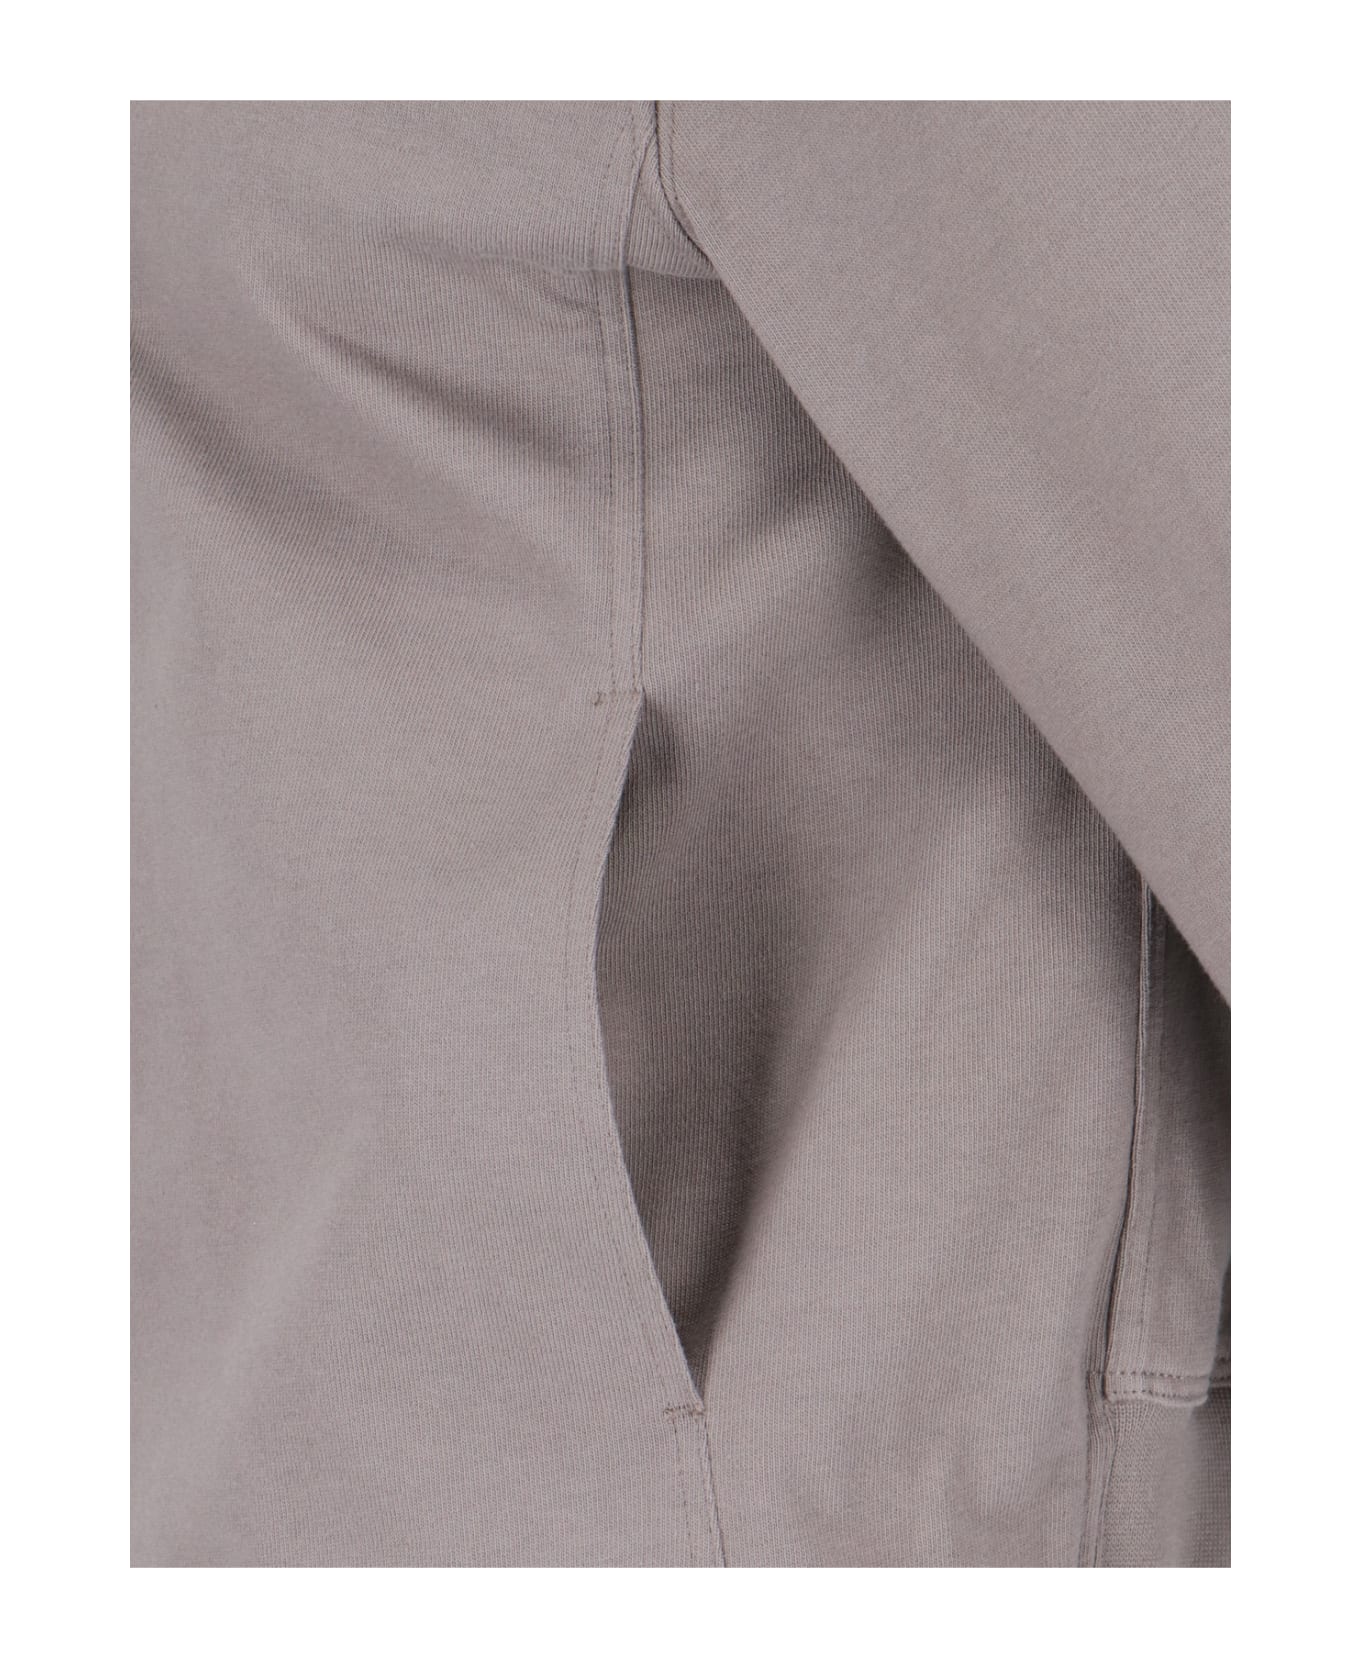 Rick Owens Asymmetrical Zip Sweatshirt - Taupe ニットウェア